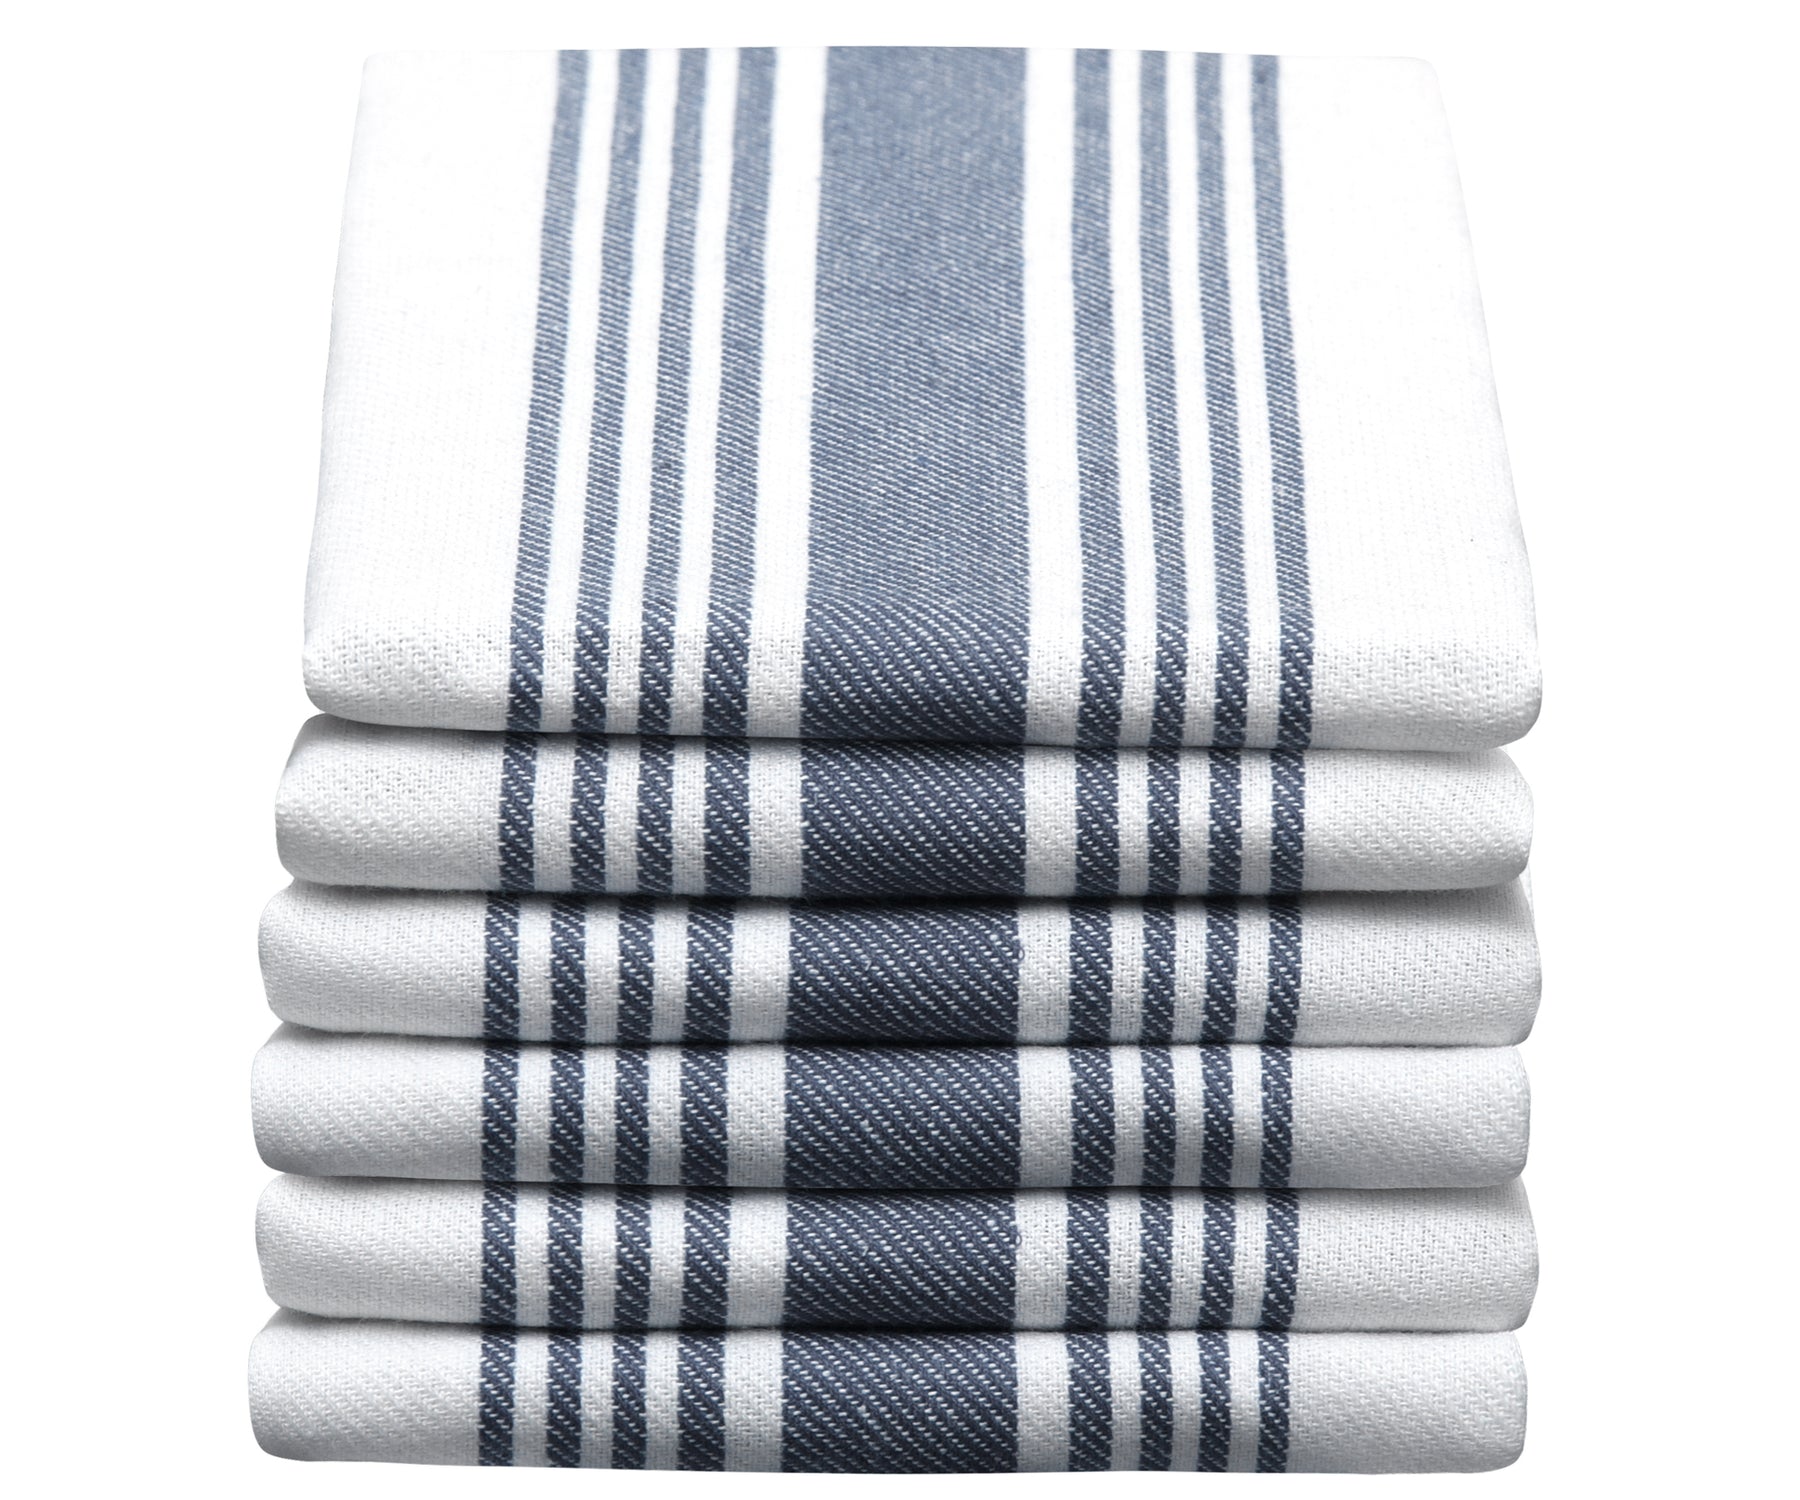 Blue dish Towels, Cloth Dish Towels, Cotton Dish towels, Kitchen Hand Towels, Blue Kitchen Towels